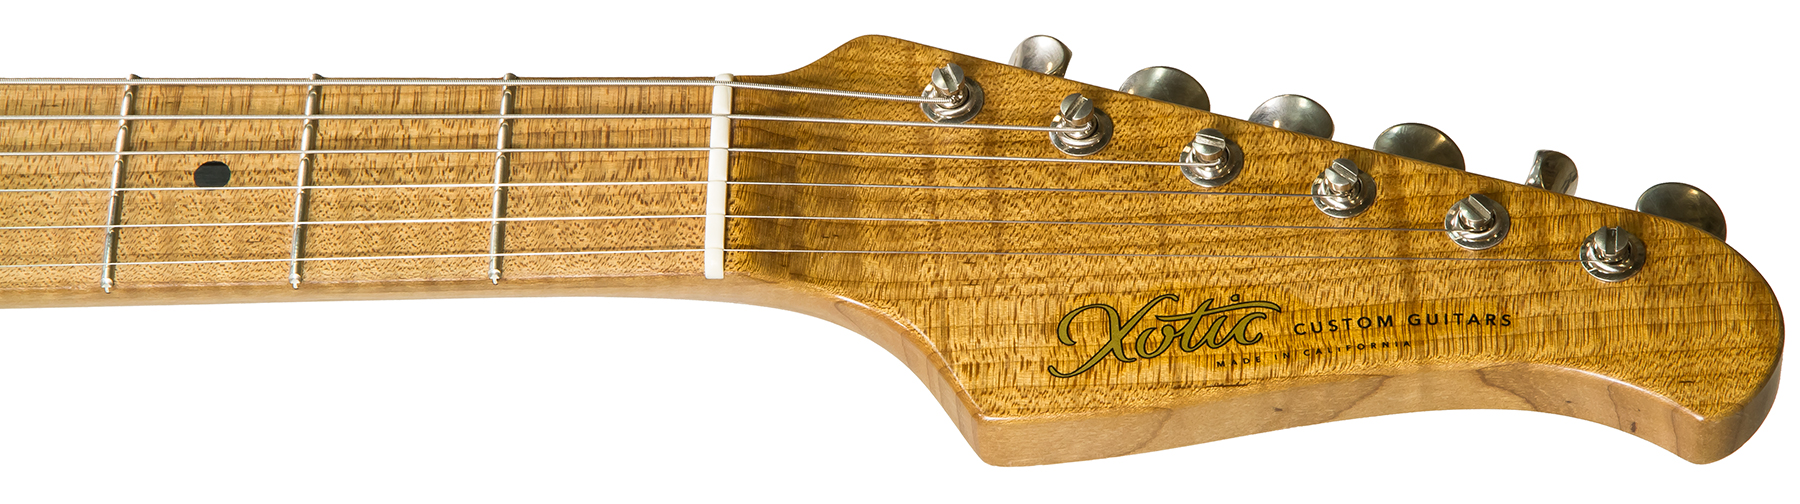 Xotic Xsc-1 Alder California Classic 3s Mn - Medium Aging Seafoam Green - Guitarra eléctrica con forma de str. - Variation 5